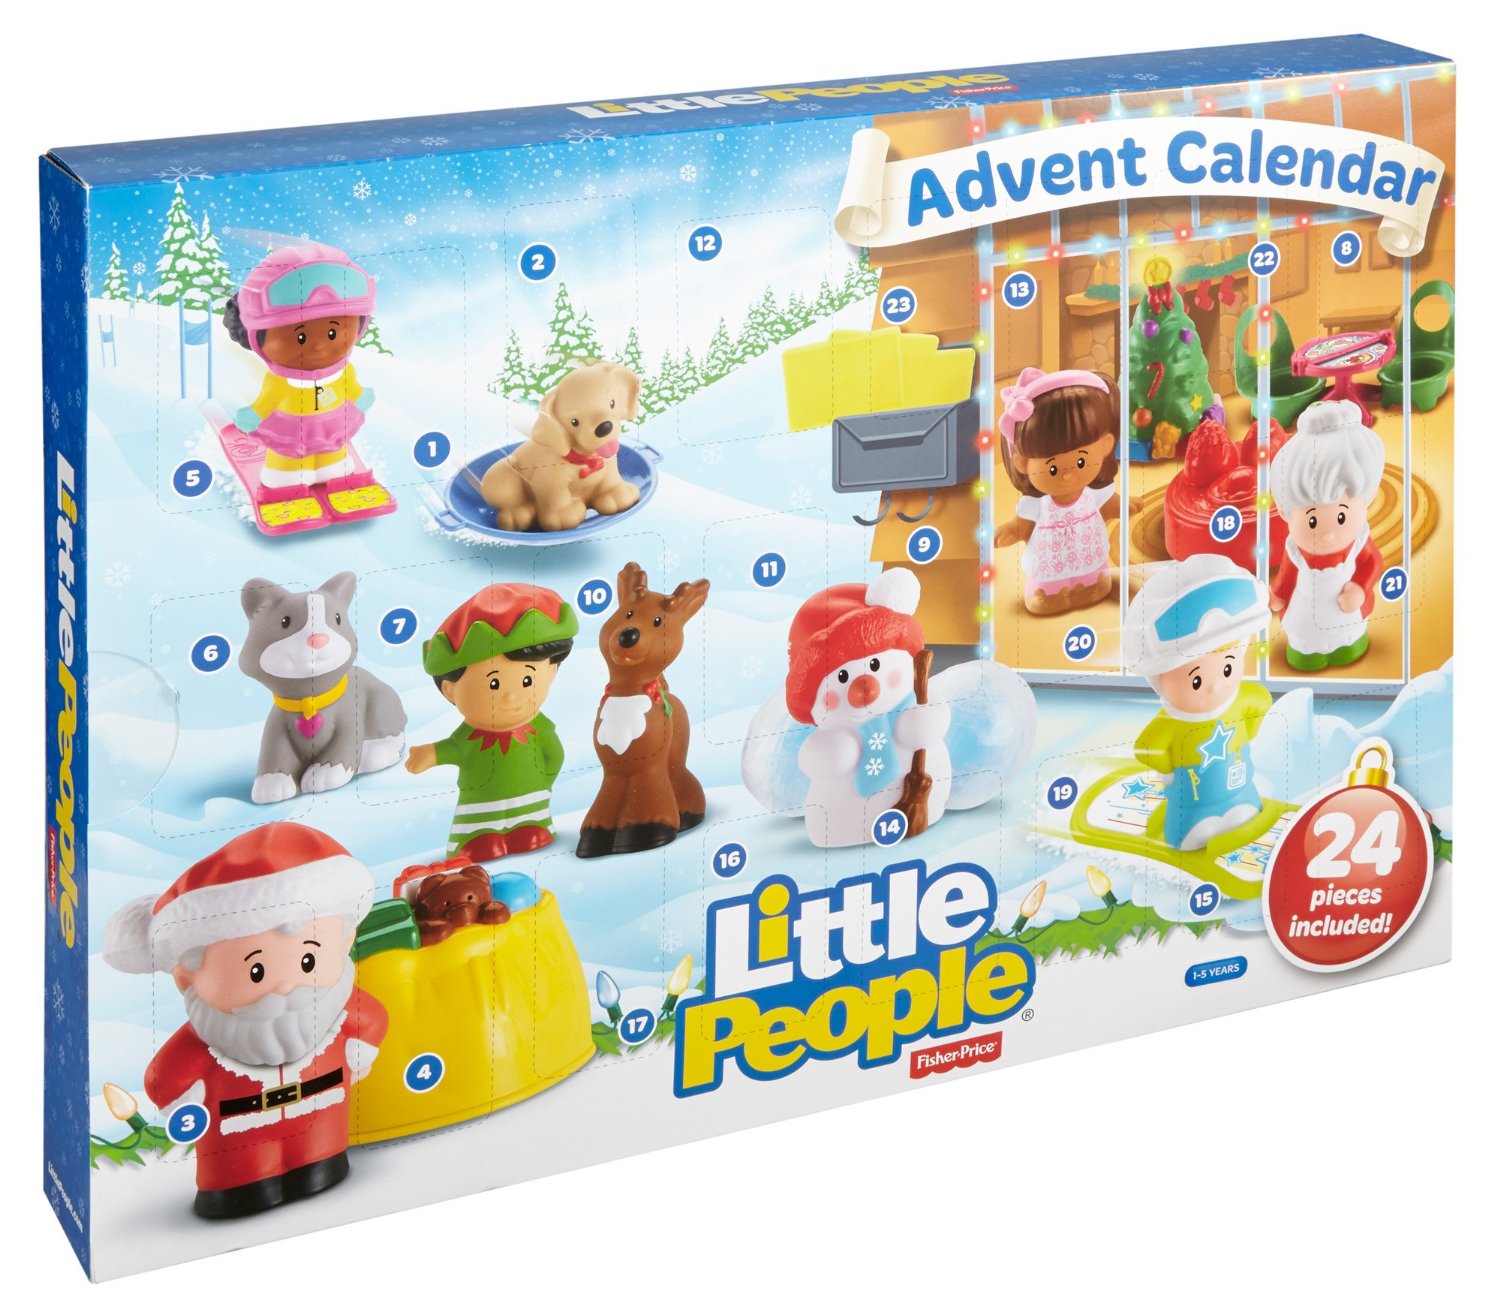 Disney Tsum Tsum Advent Calendar on sale